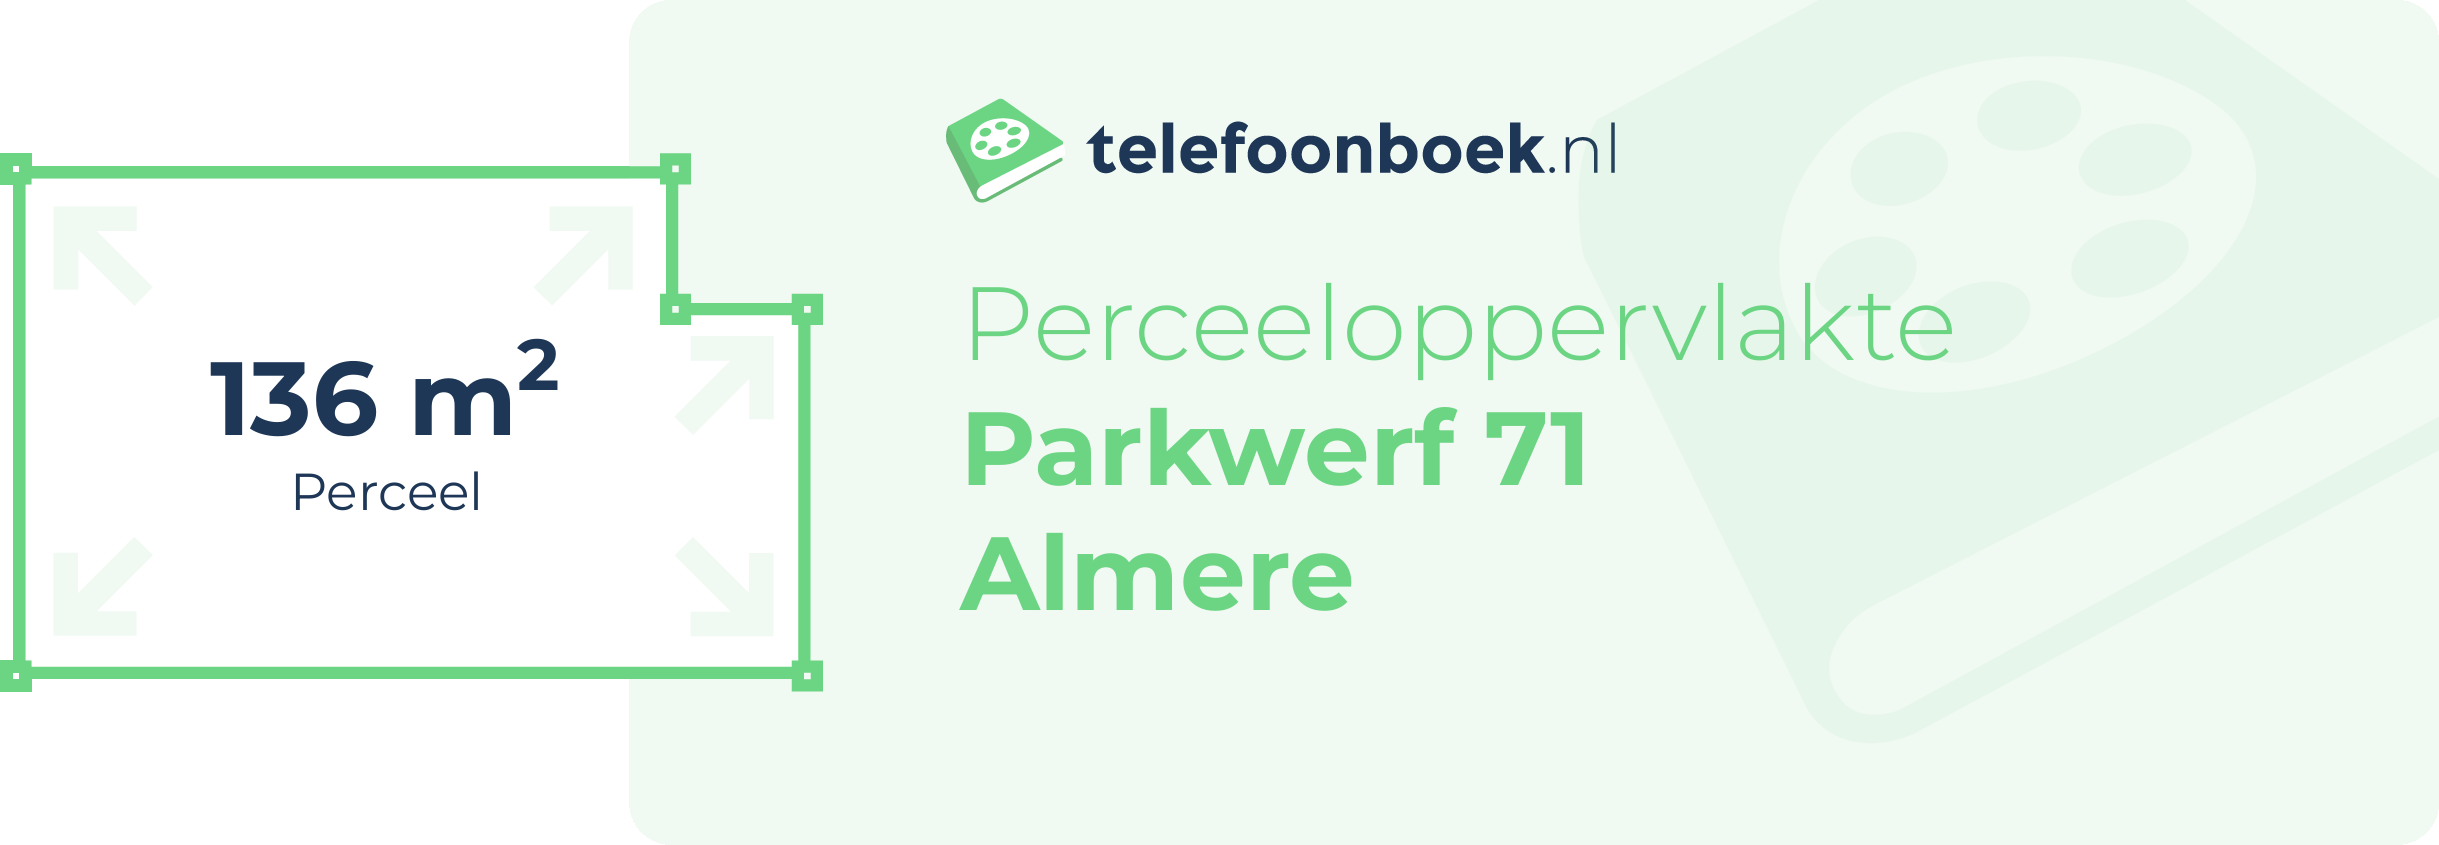 Perceeloppervlakte Parkwerf 71 Almere